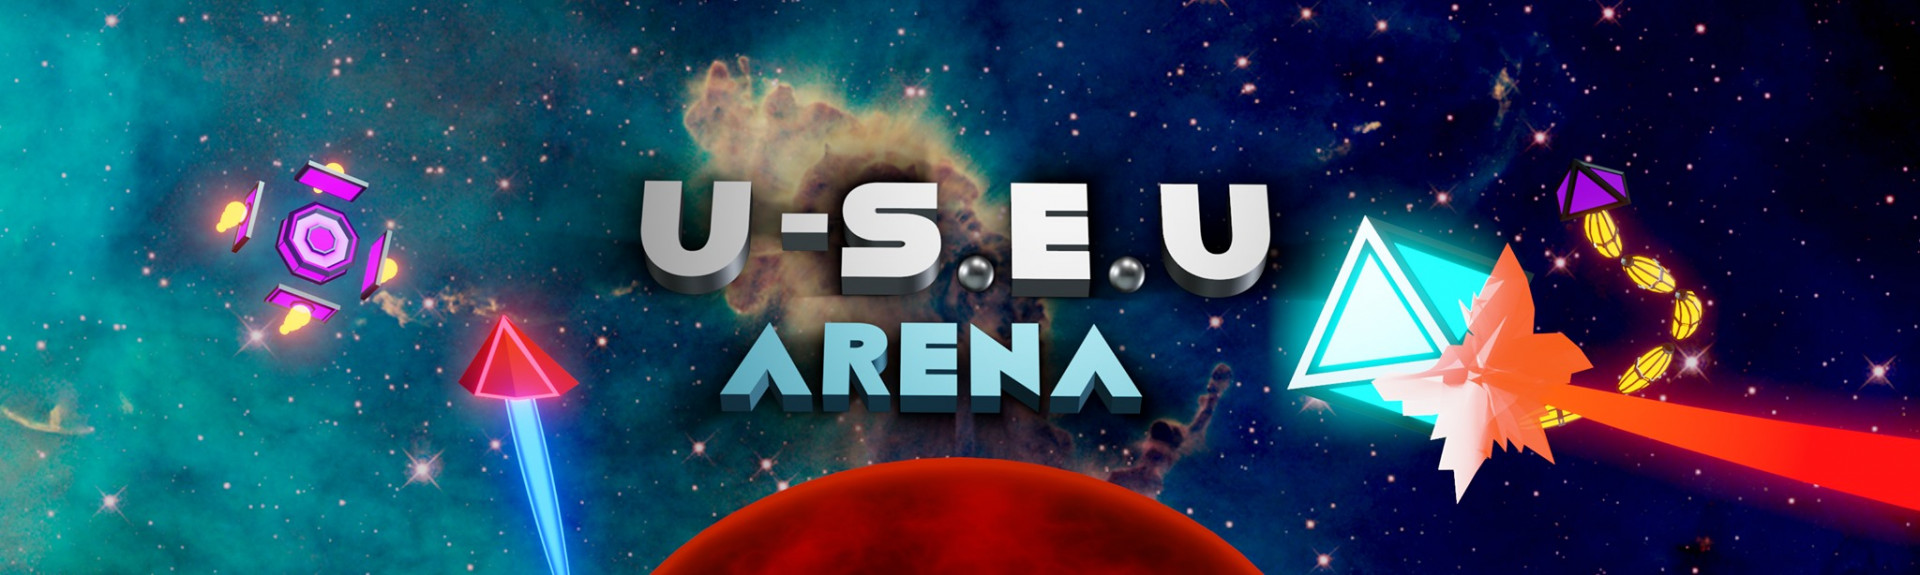 USEU Arena